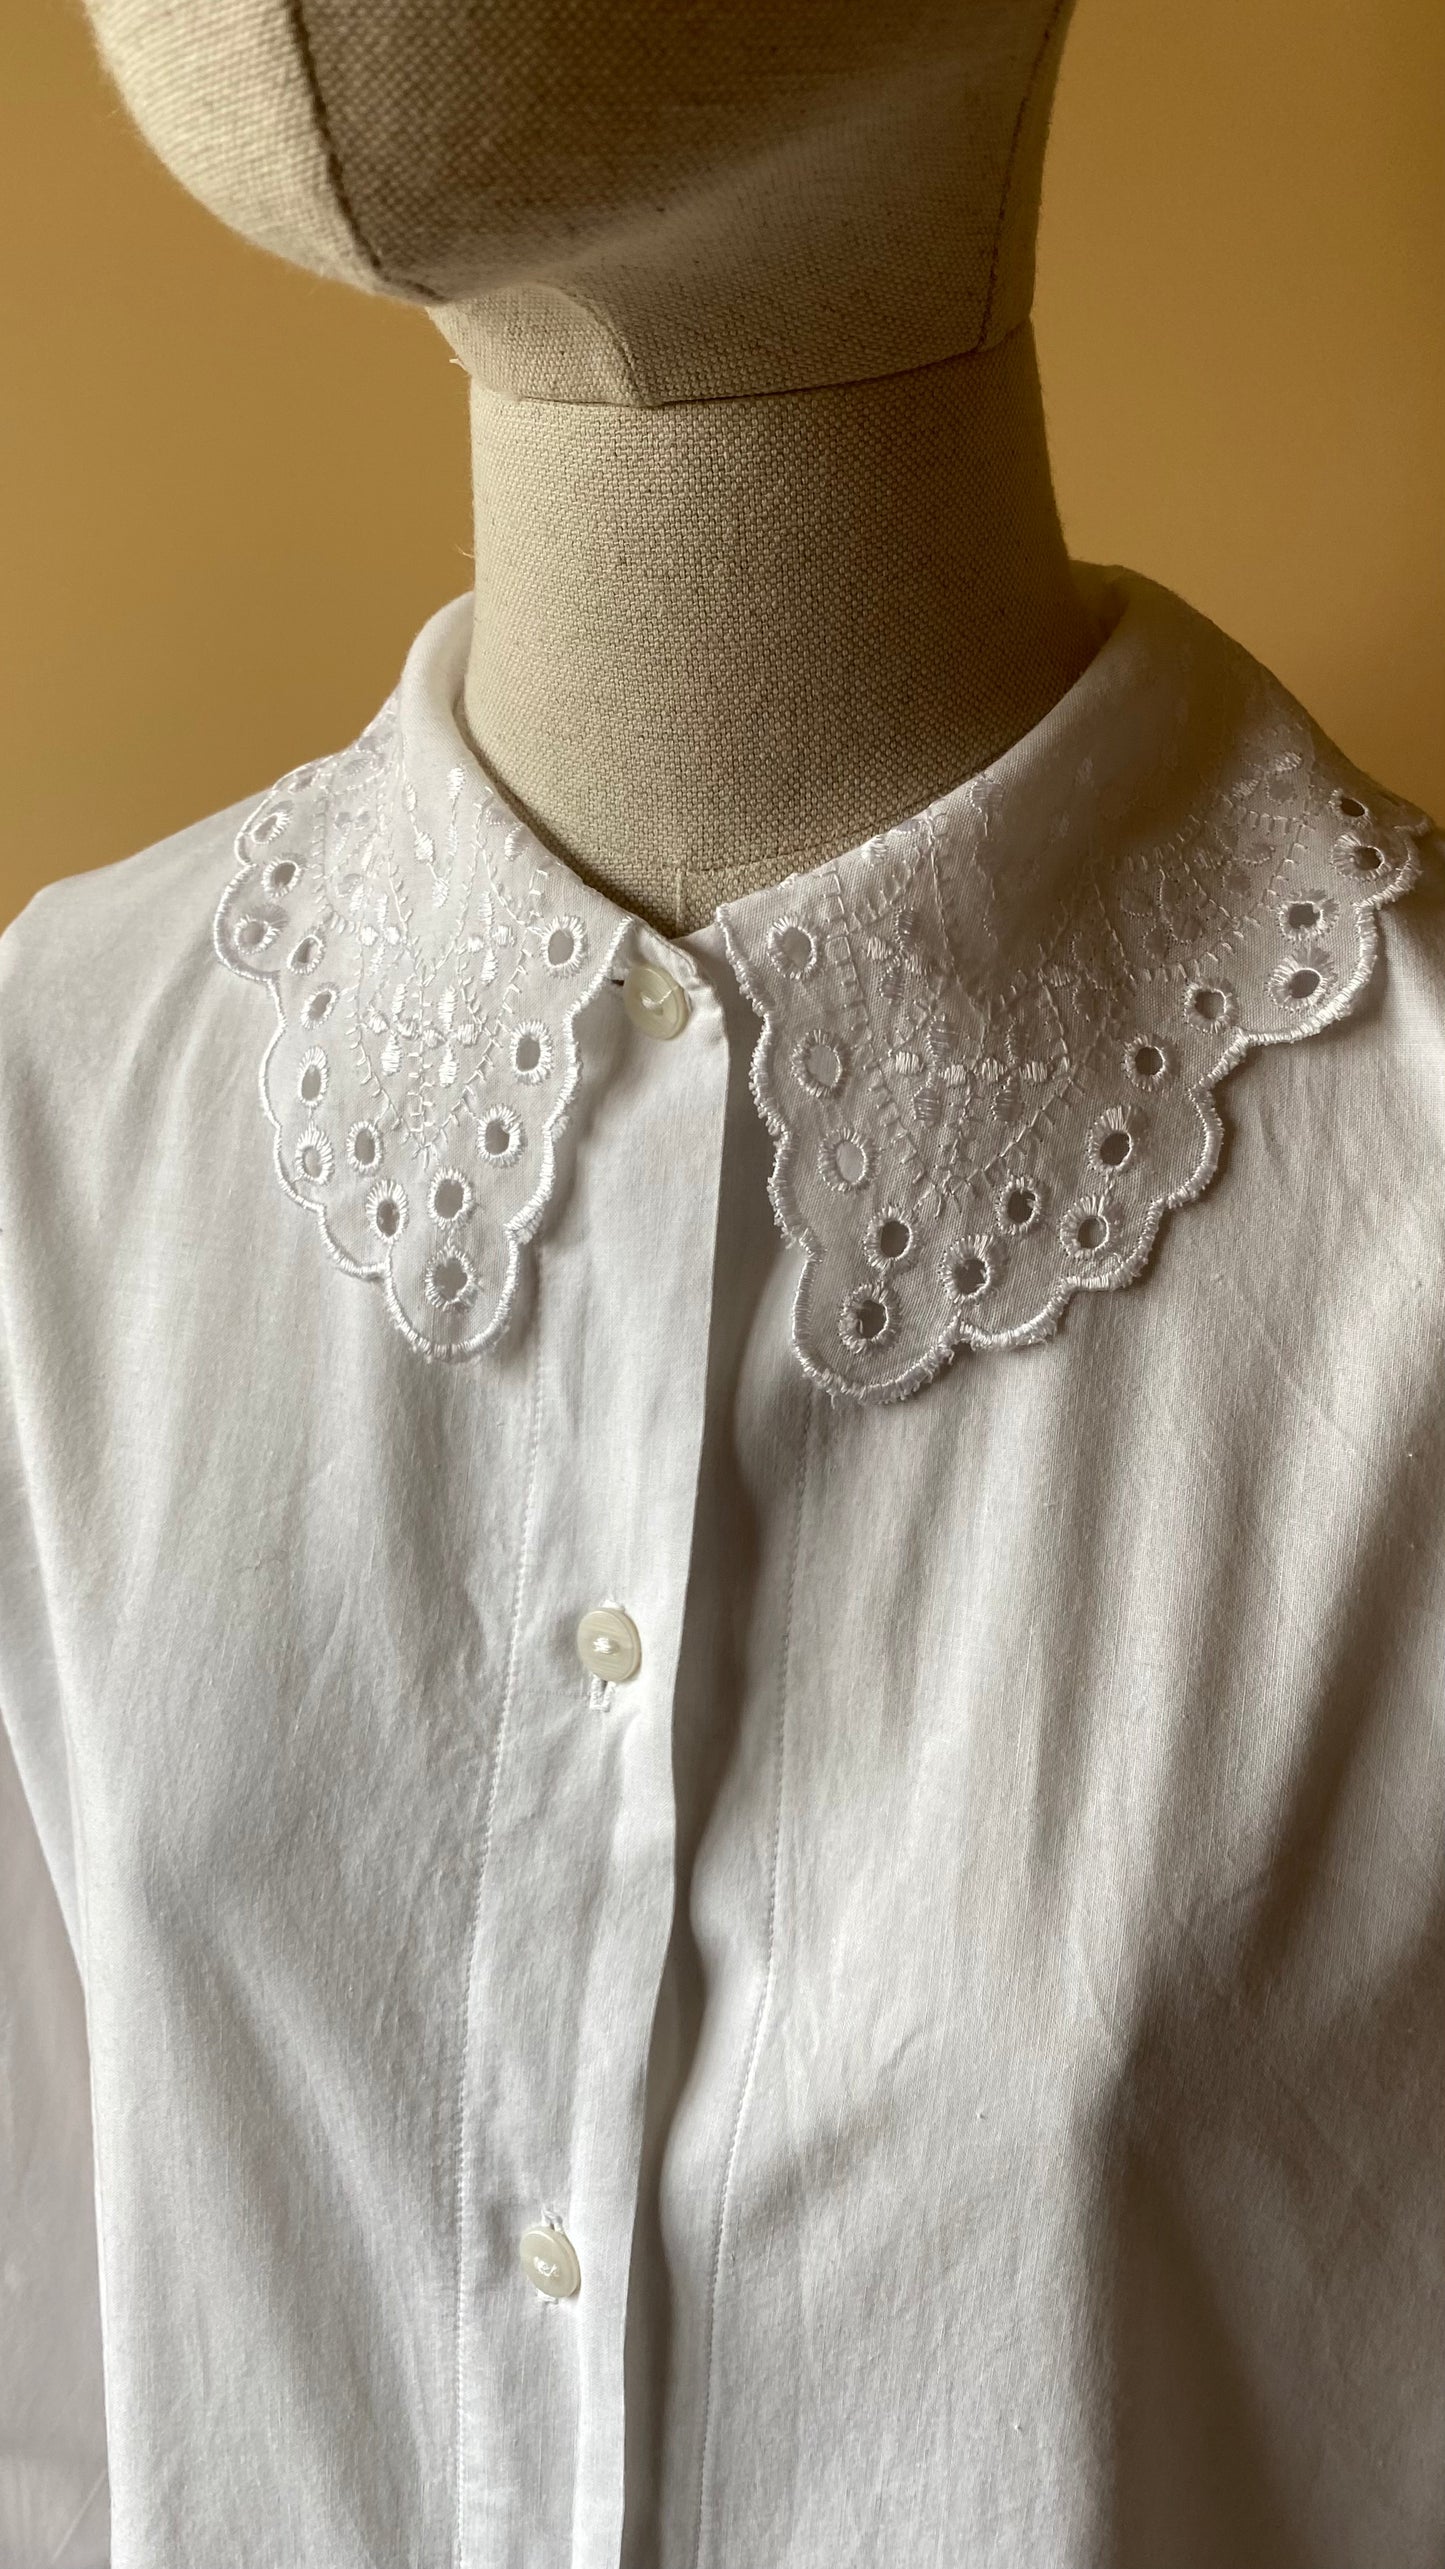 Vintage Romantic White Shirt